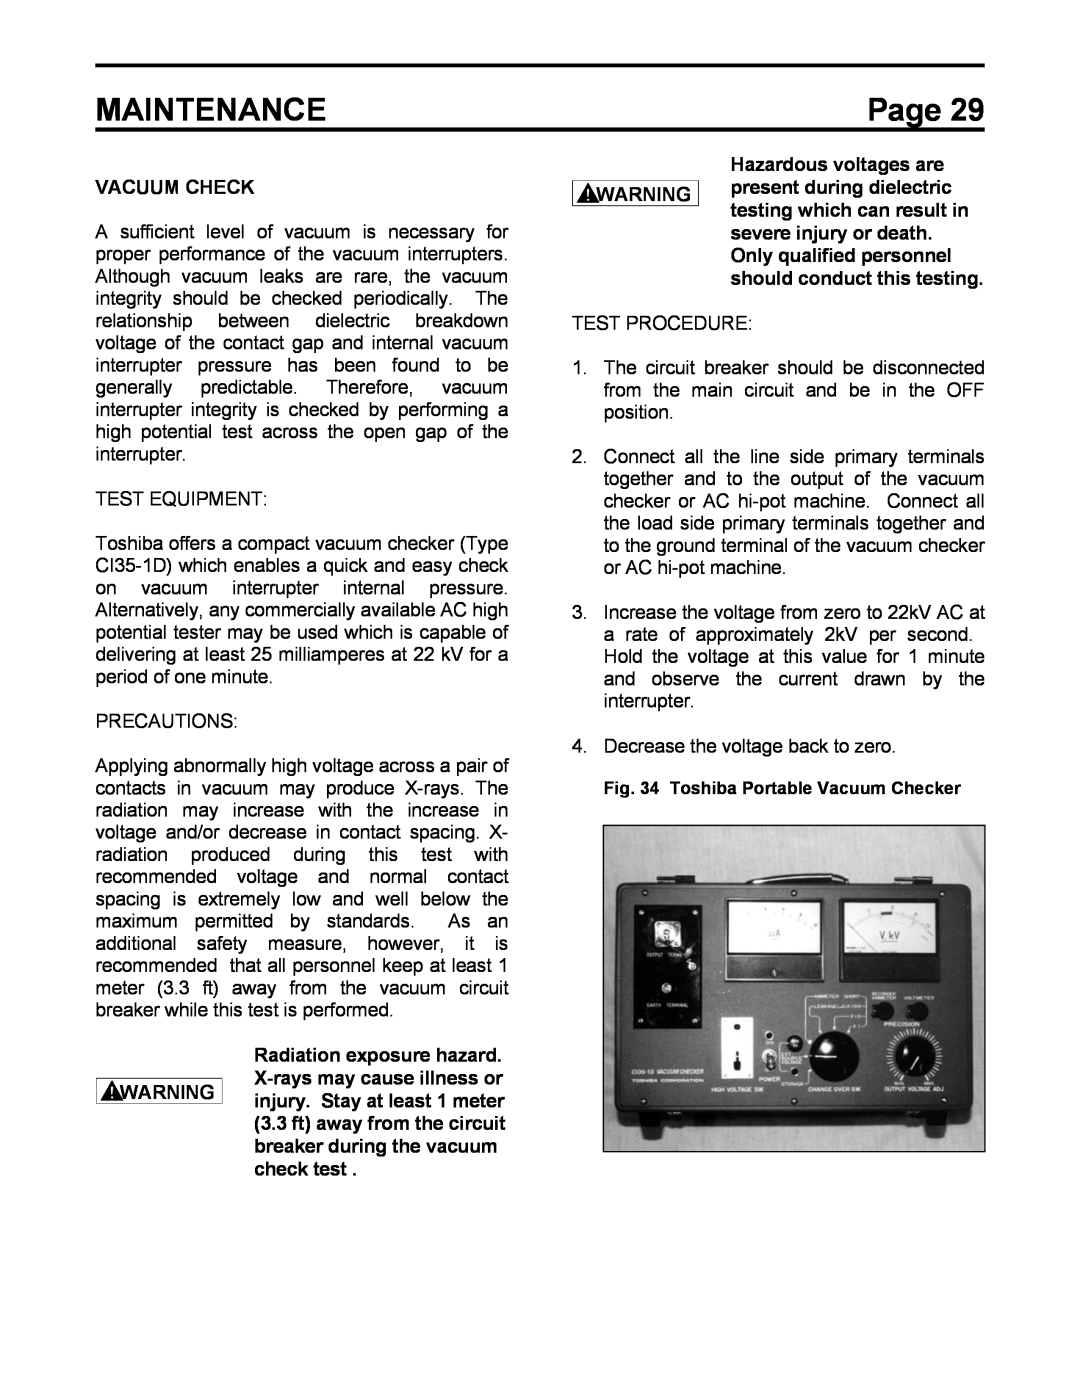 Toshiba HV6AS instruction manual Vacuum Check, Maintenance, Page 